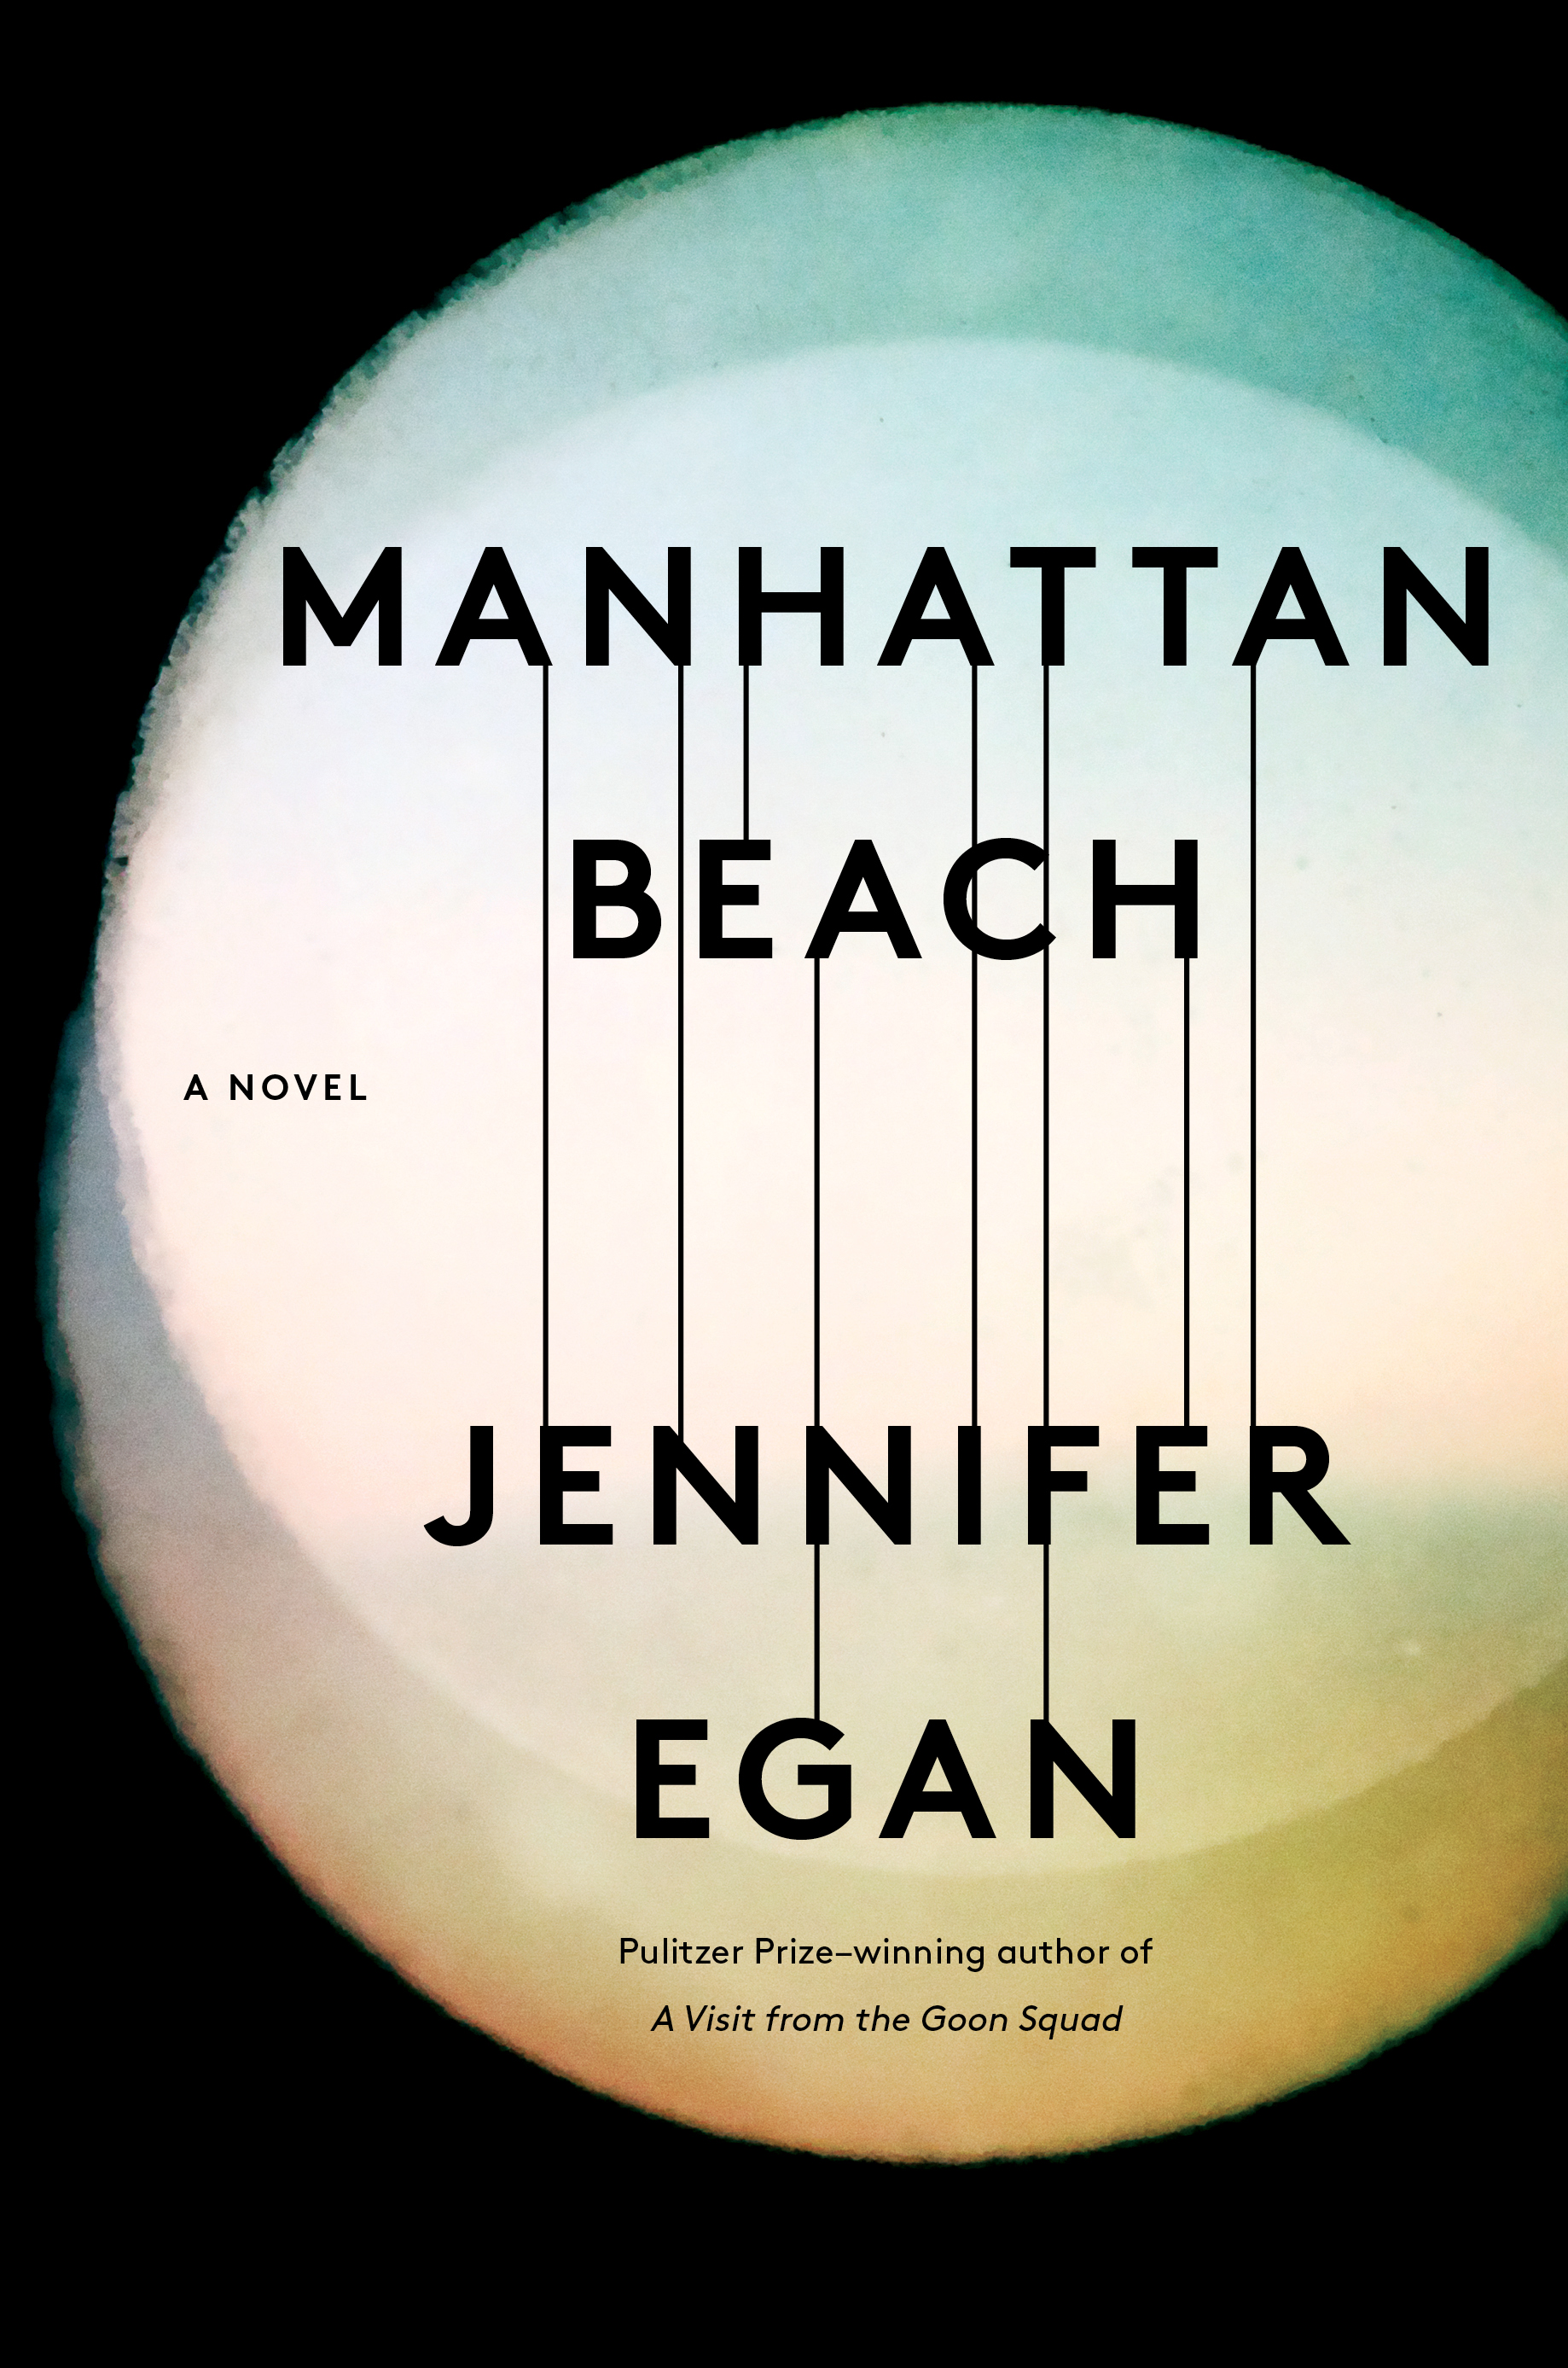 "Cover of Manhattan Beach book by Penn alum Jennifer Egan"